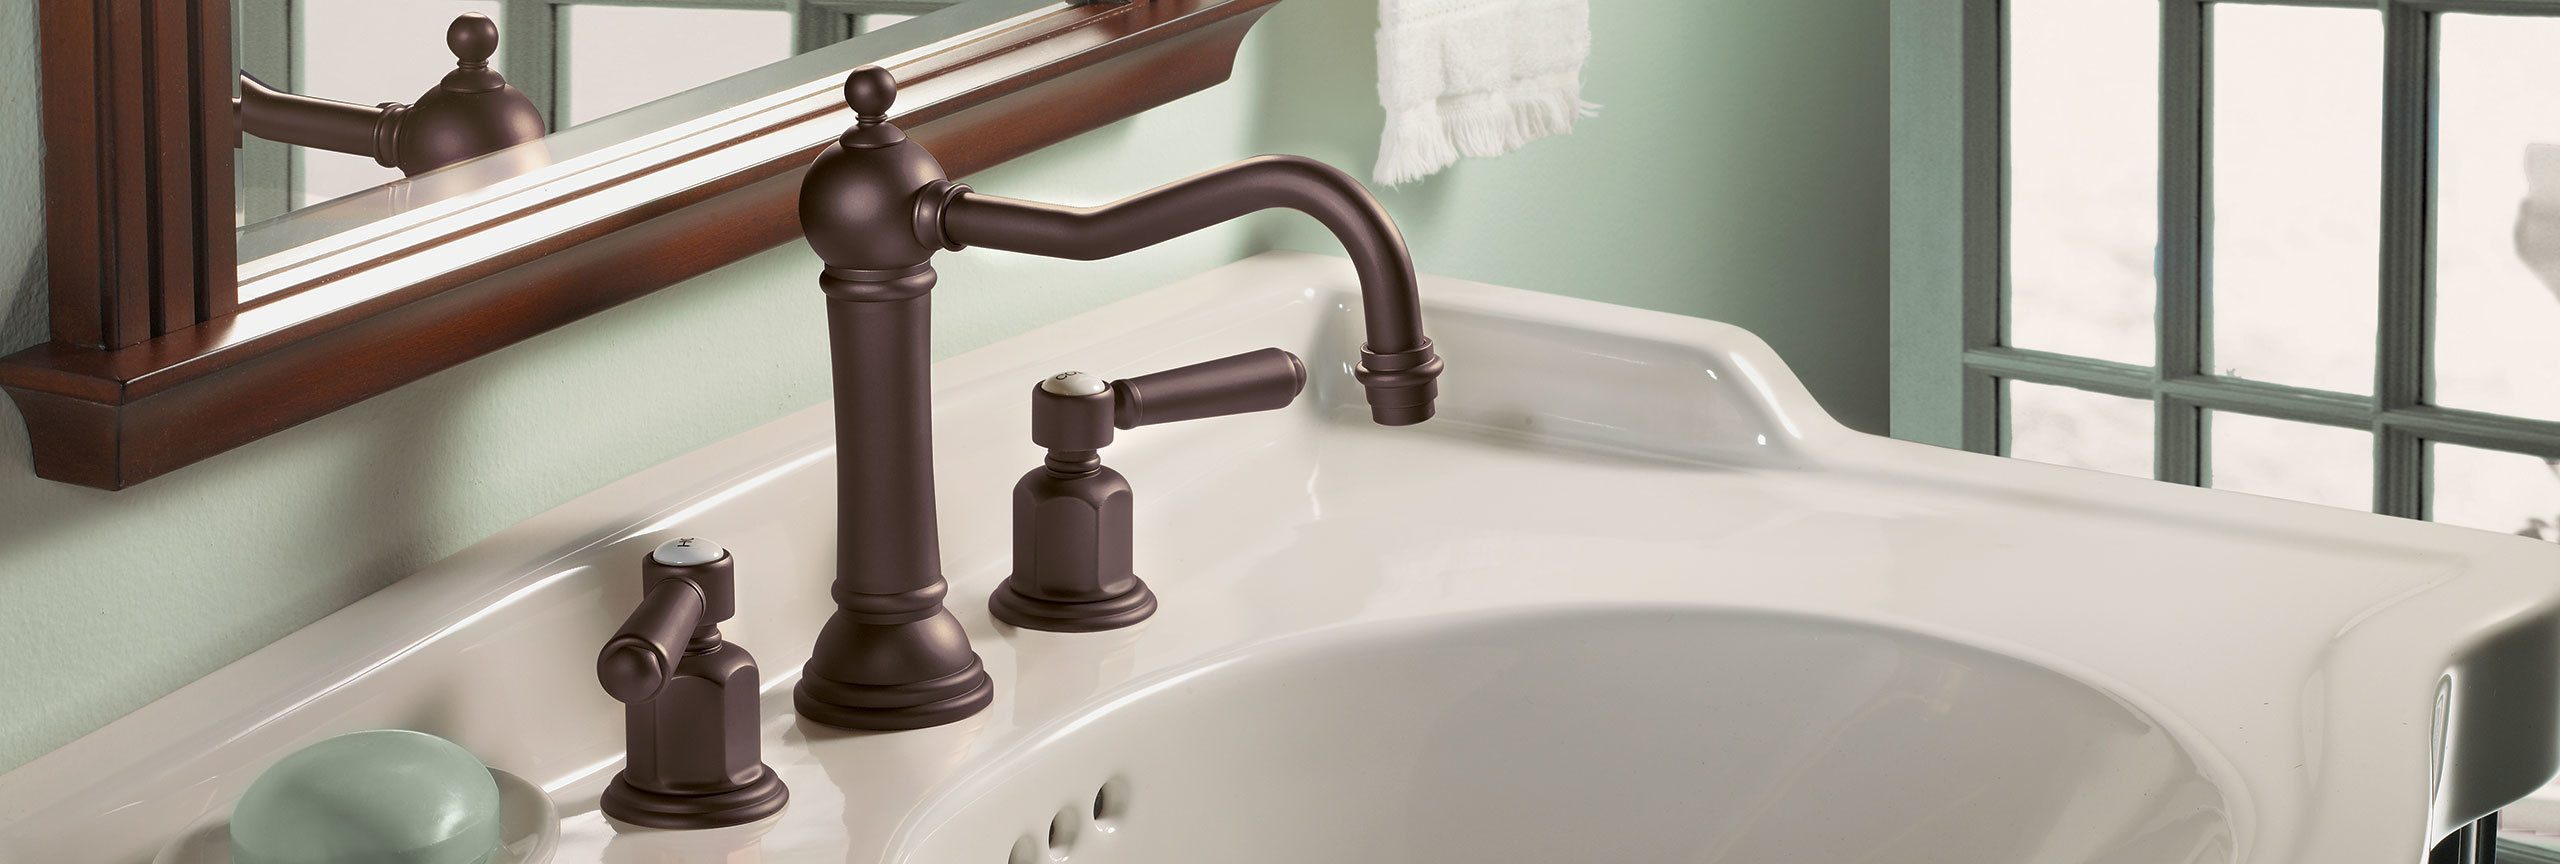 Bathroom series montecito widespread faucet in oil rubbed bronze